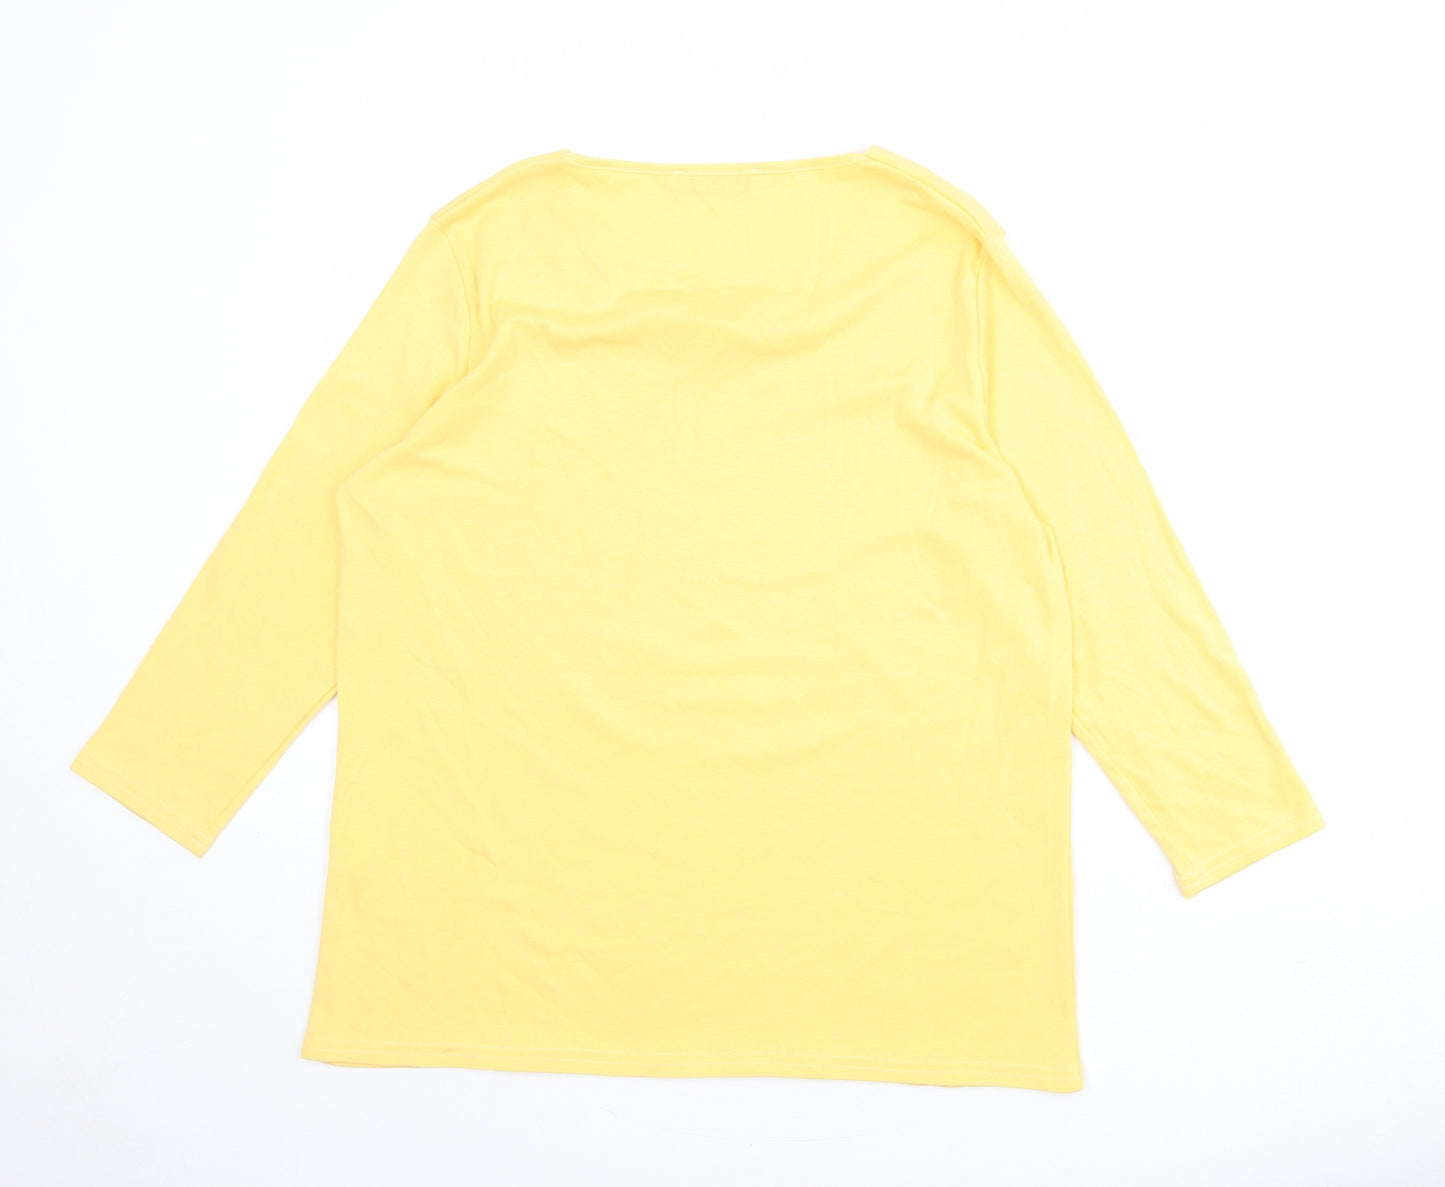 Afibel Womens Yellow 100% Cotton Basic Blouse Size 14 Round Neck